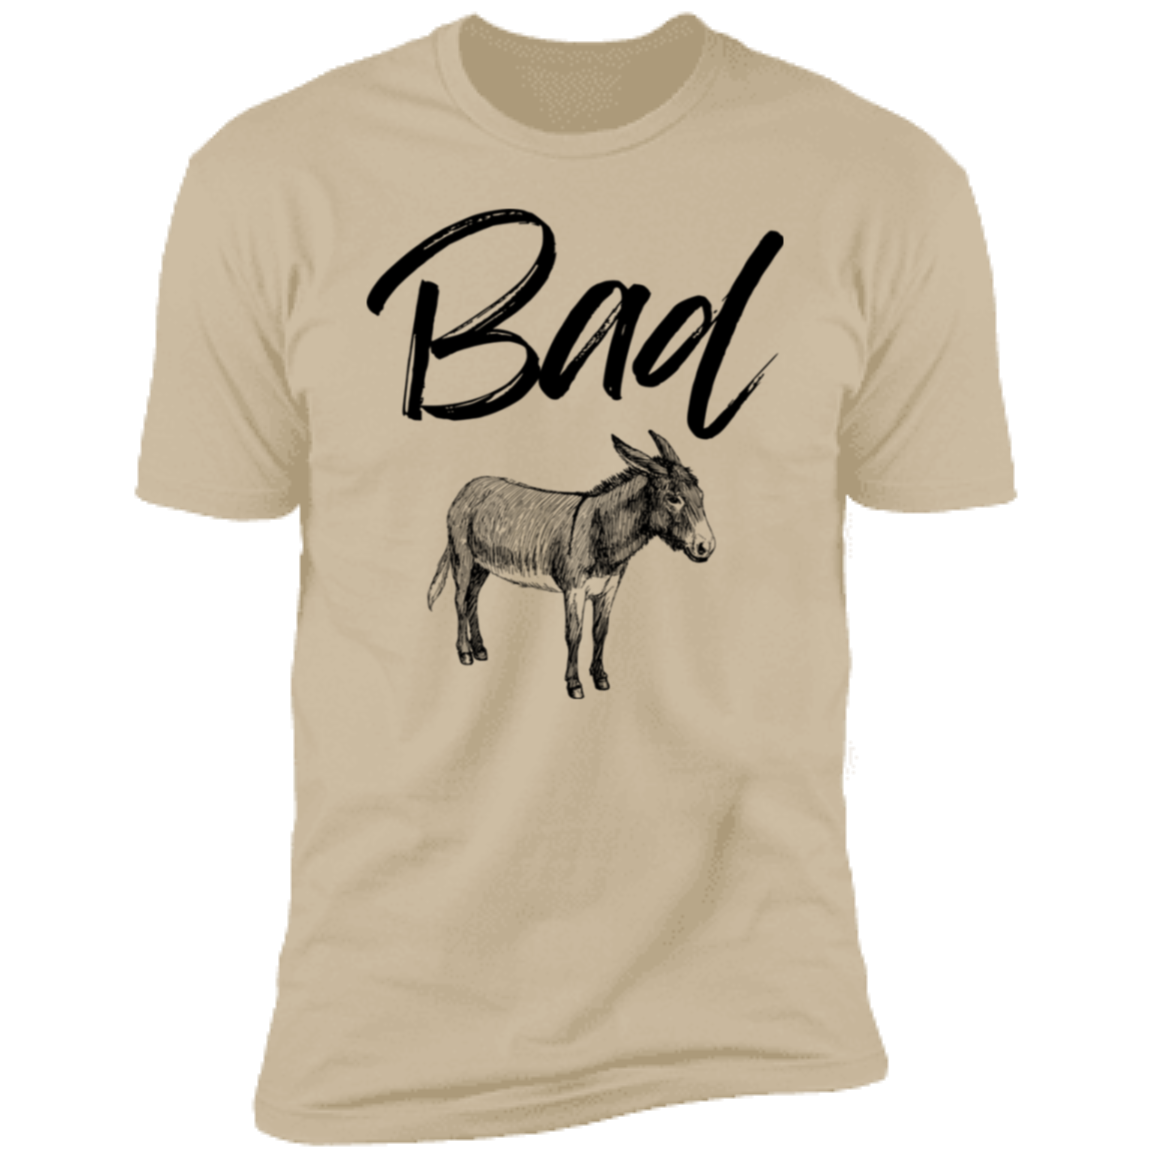 Bad A$$ T-Shirt, Funny Shirts